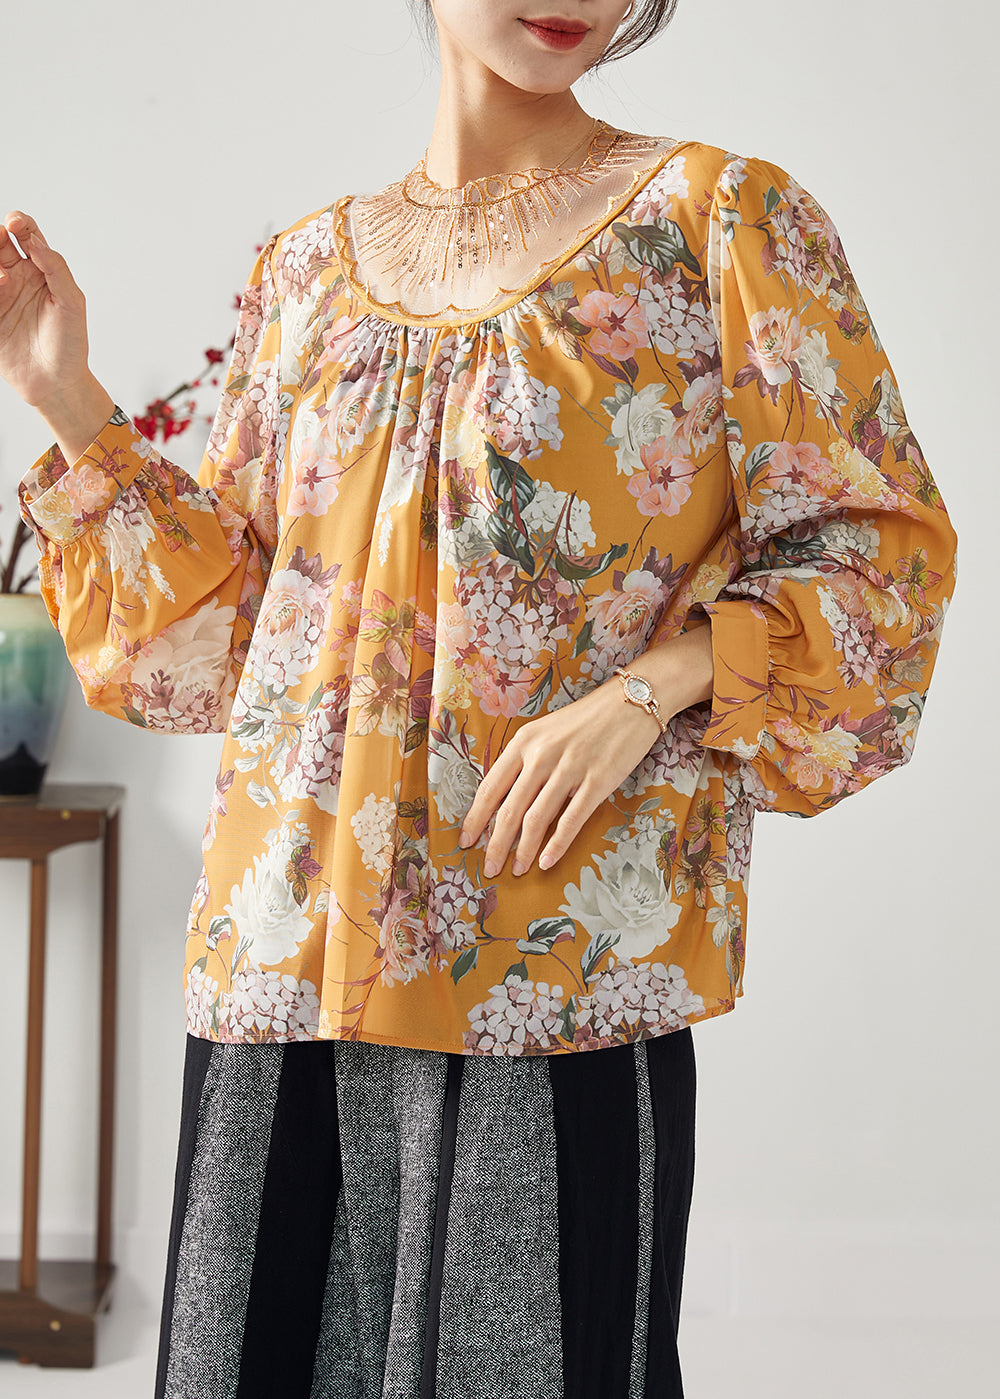 Stylish Khaki Sequins Tulle Patchwork Print Chiffon Shirt Top Spring LY1116 - fabuloryshop